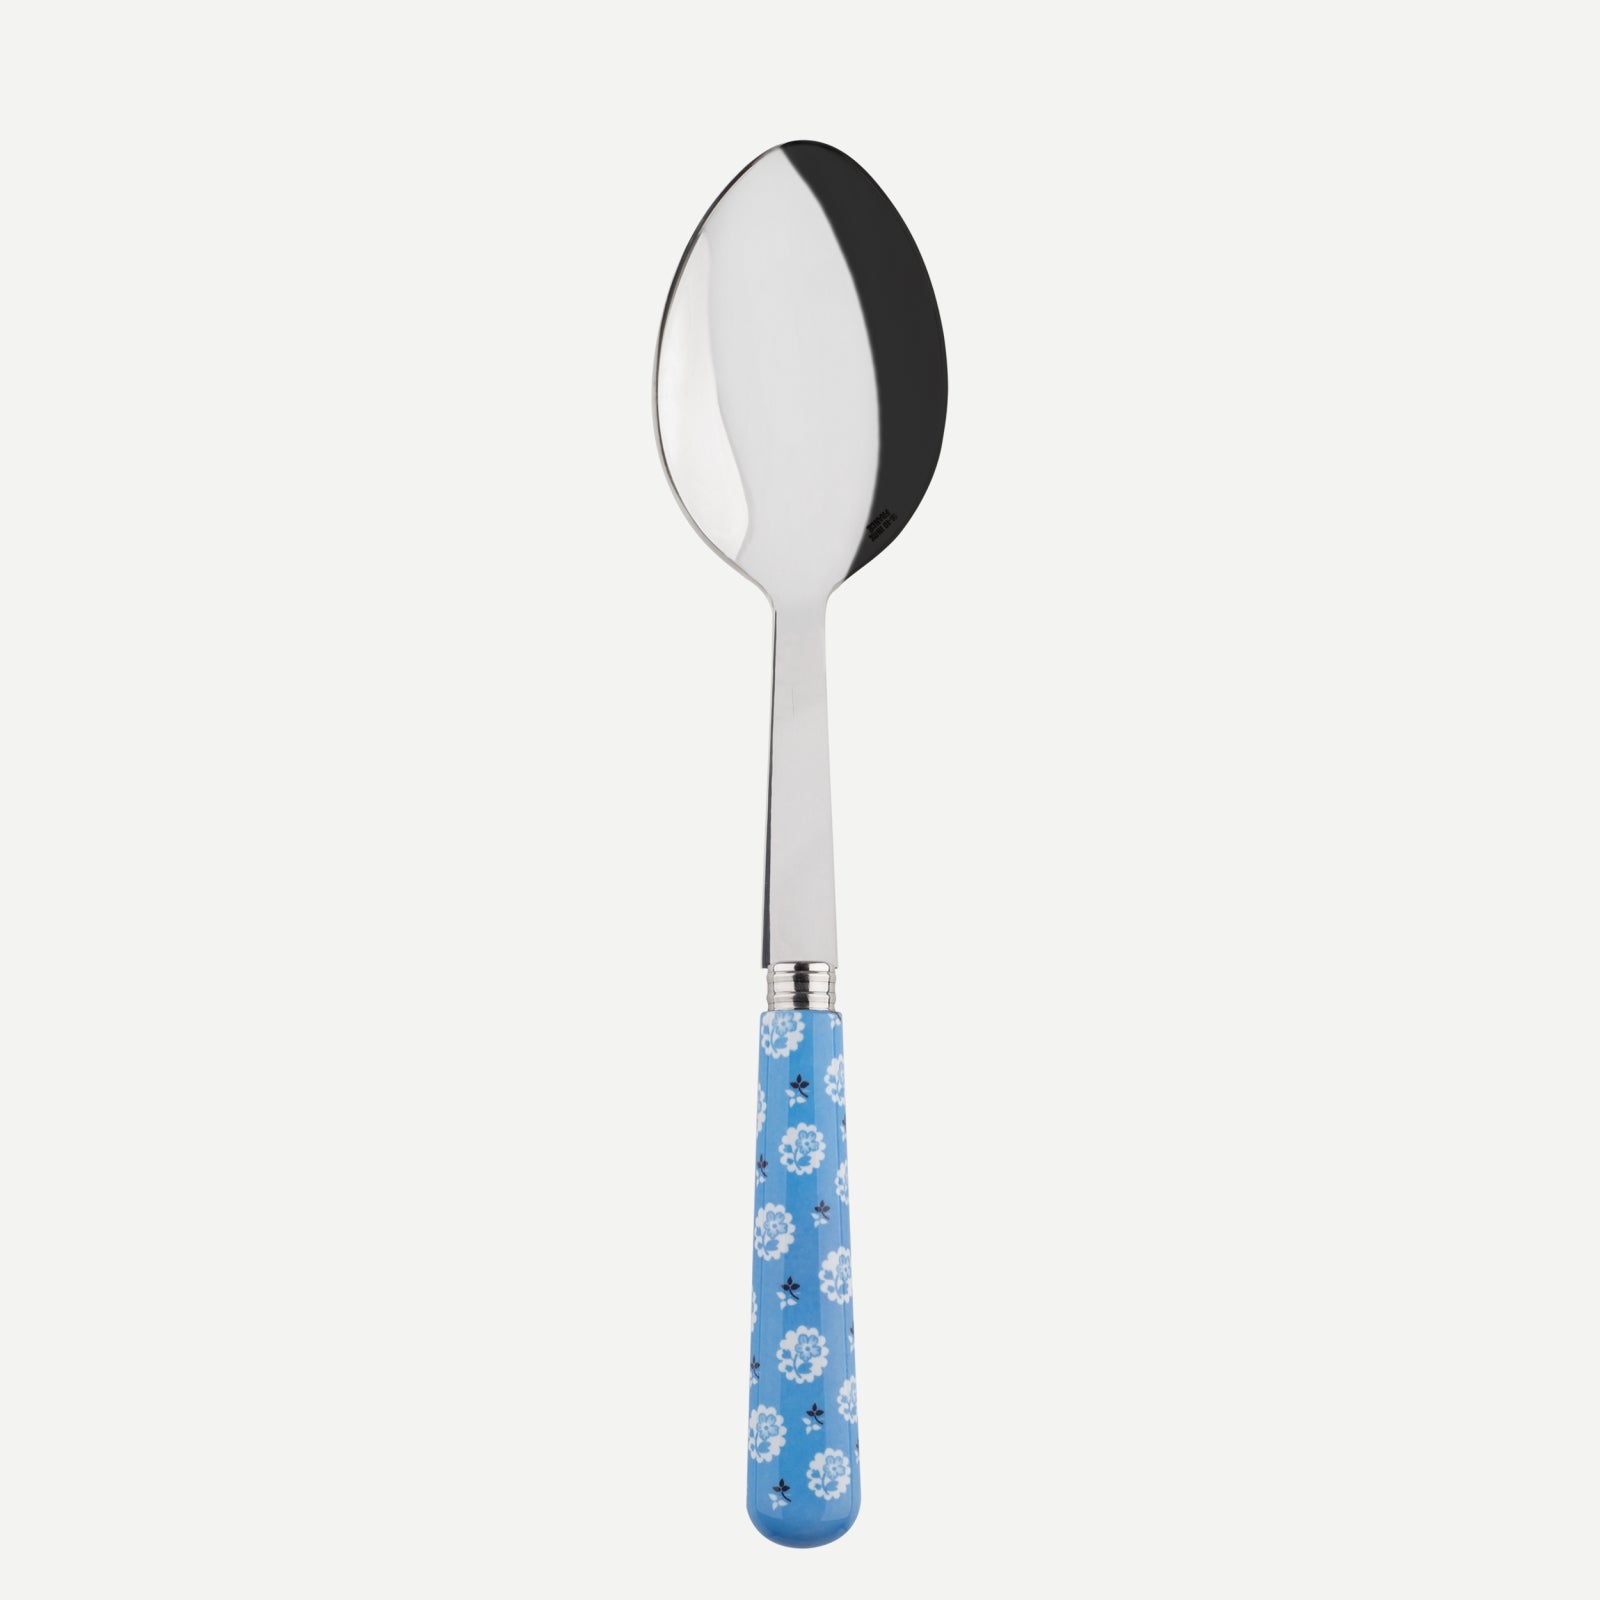 Serving spoon - Provencal - Light blue